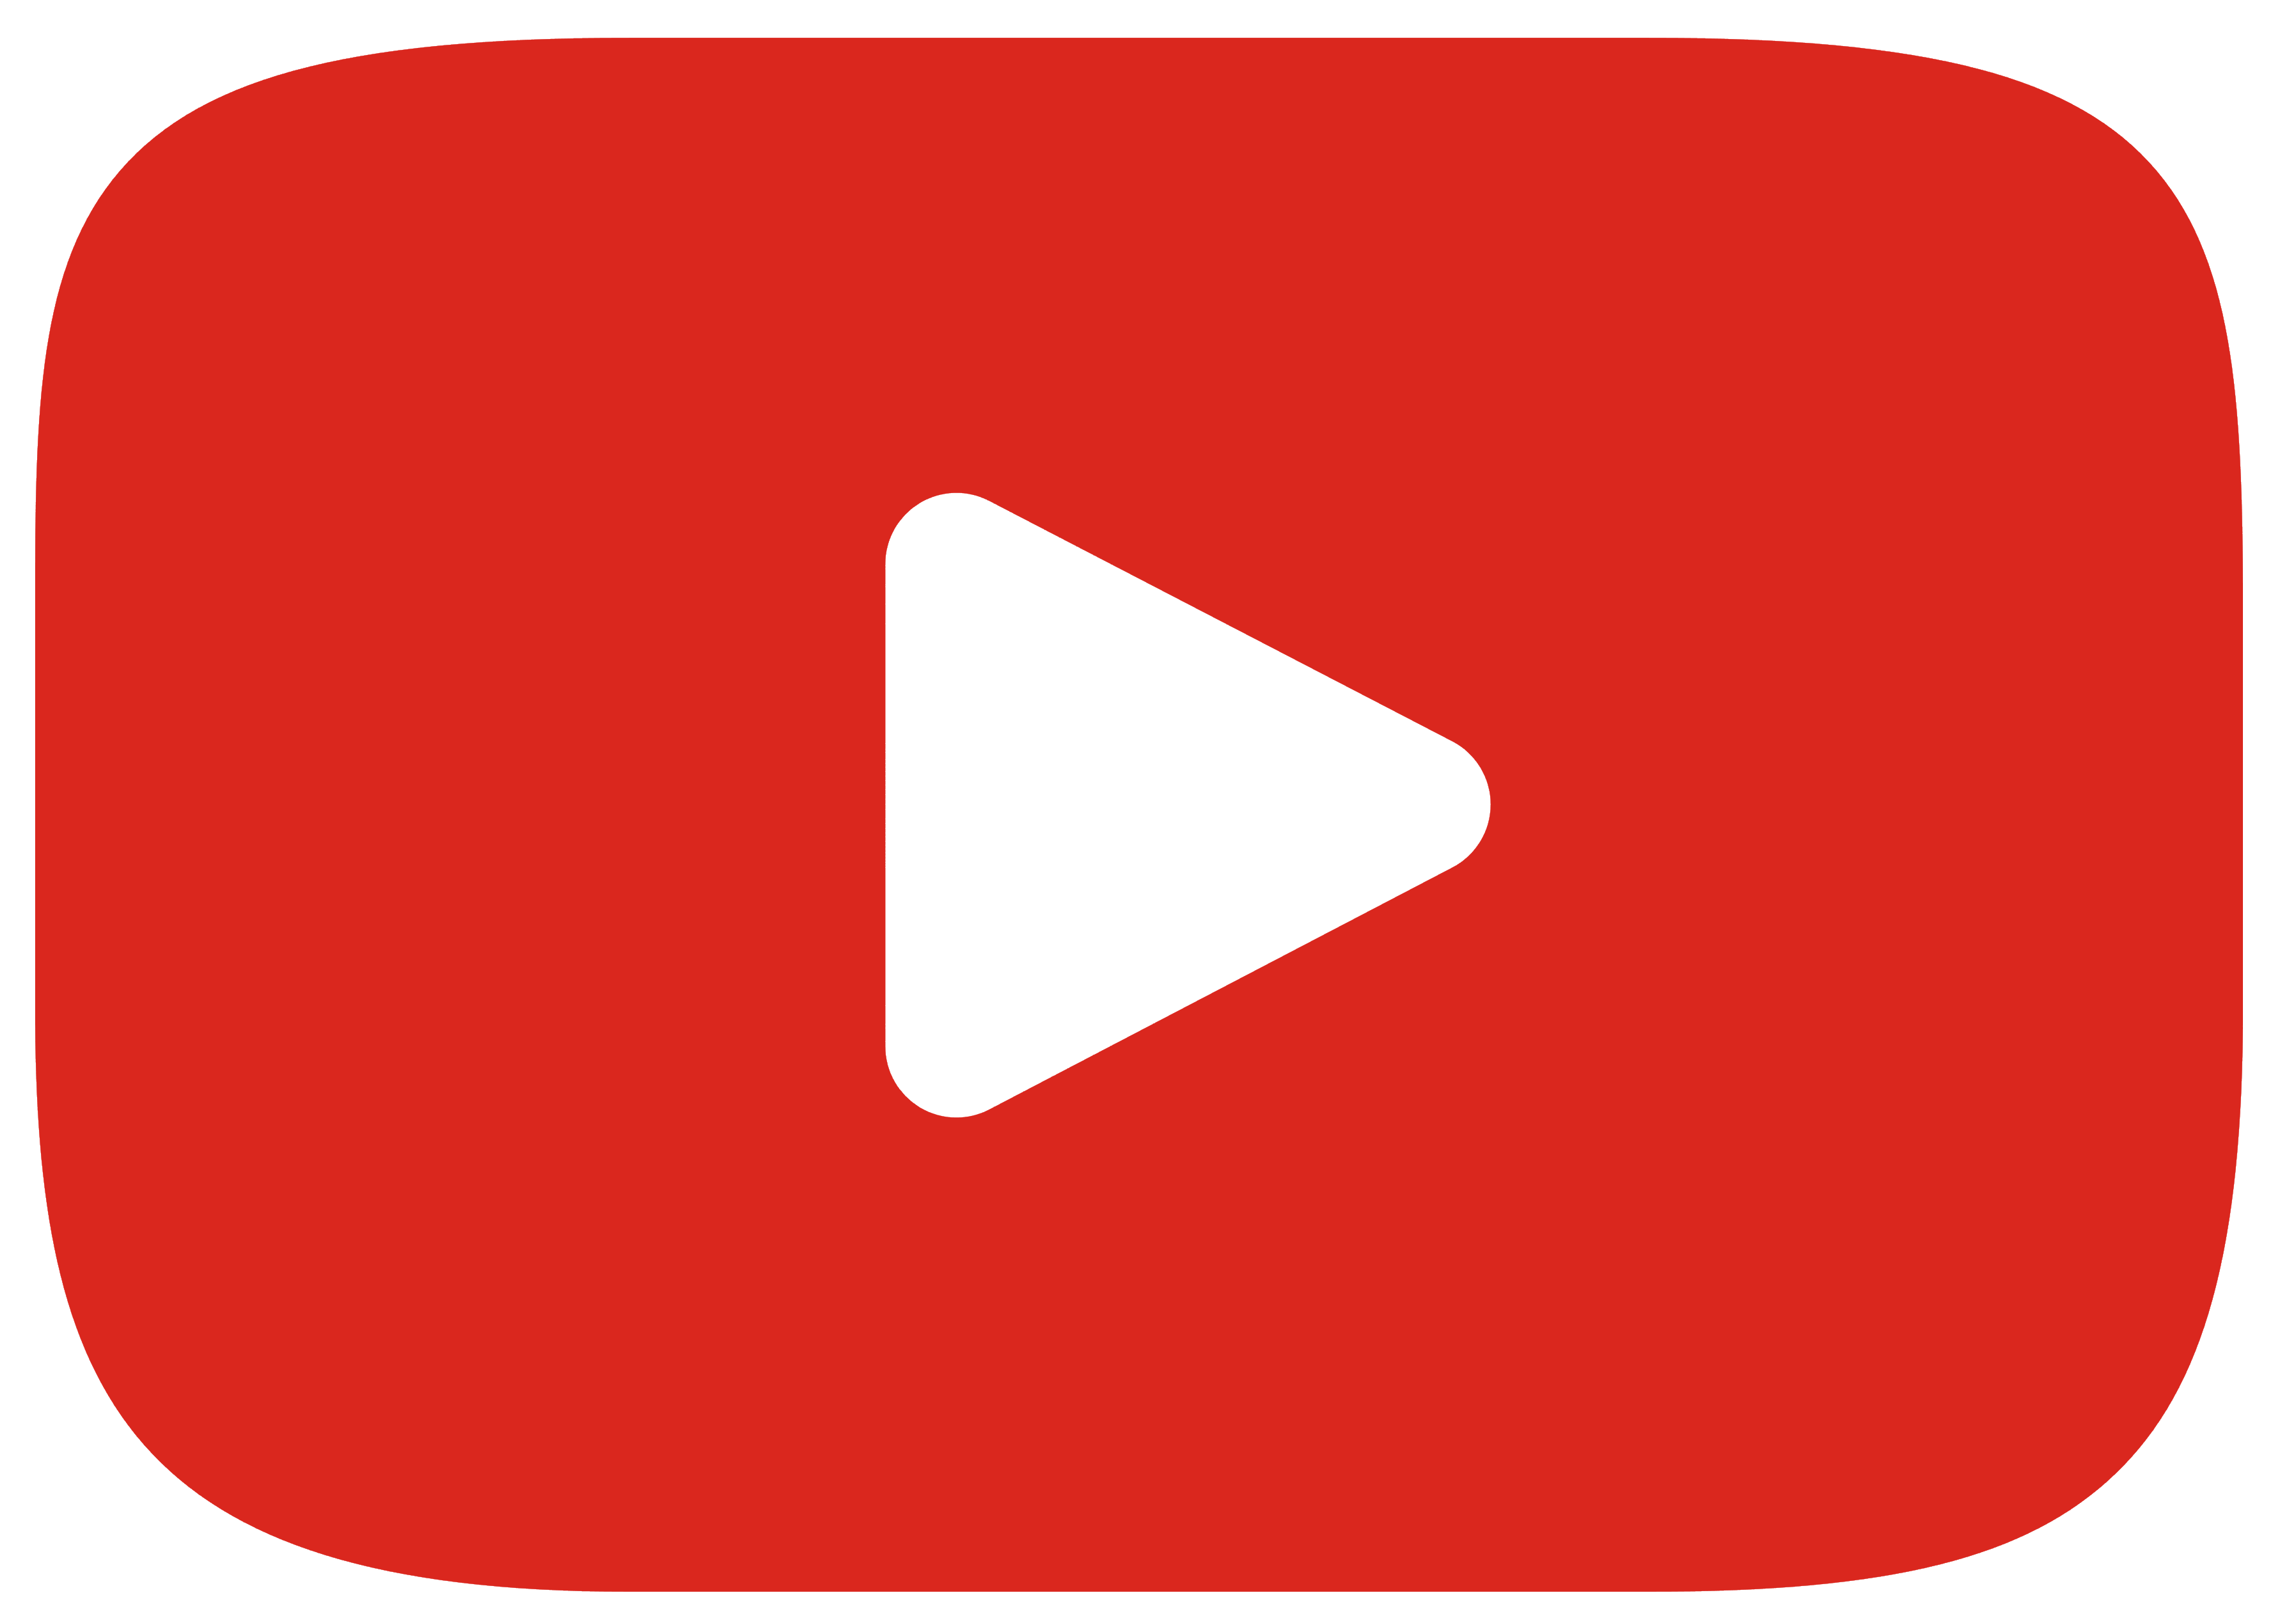 youtube-circle-logo-png-3.png